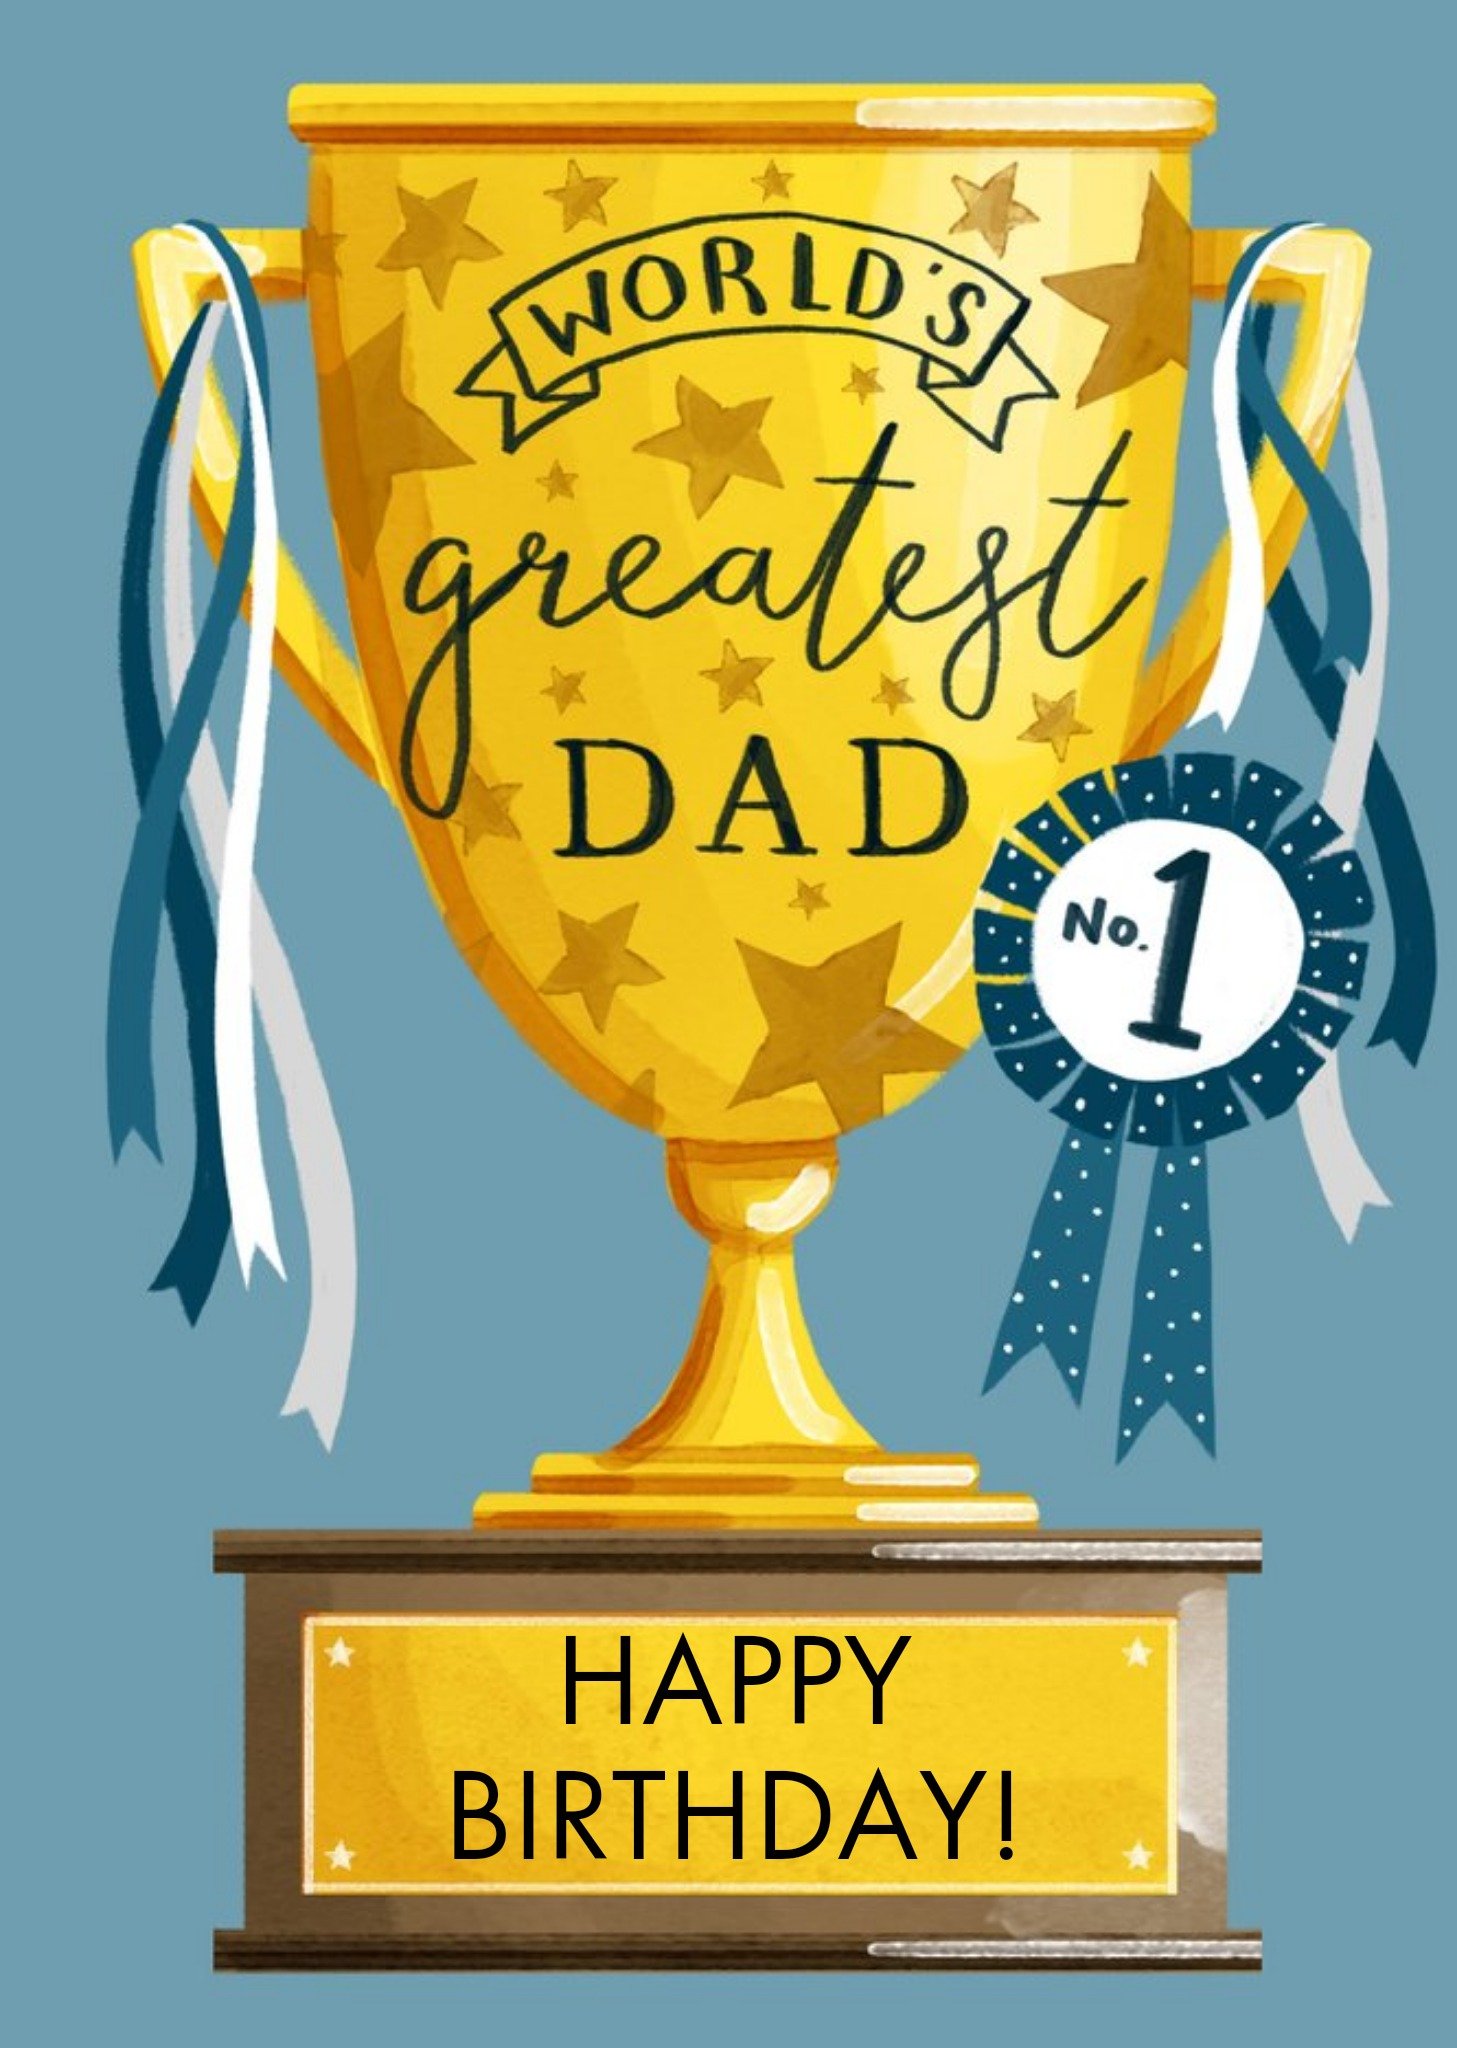 Making Meadows Worlds Greatest Dad Trophy Illustration No.1 Birthday Card Ecard